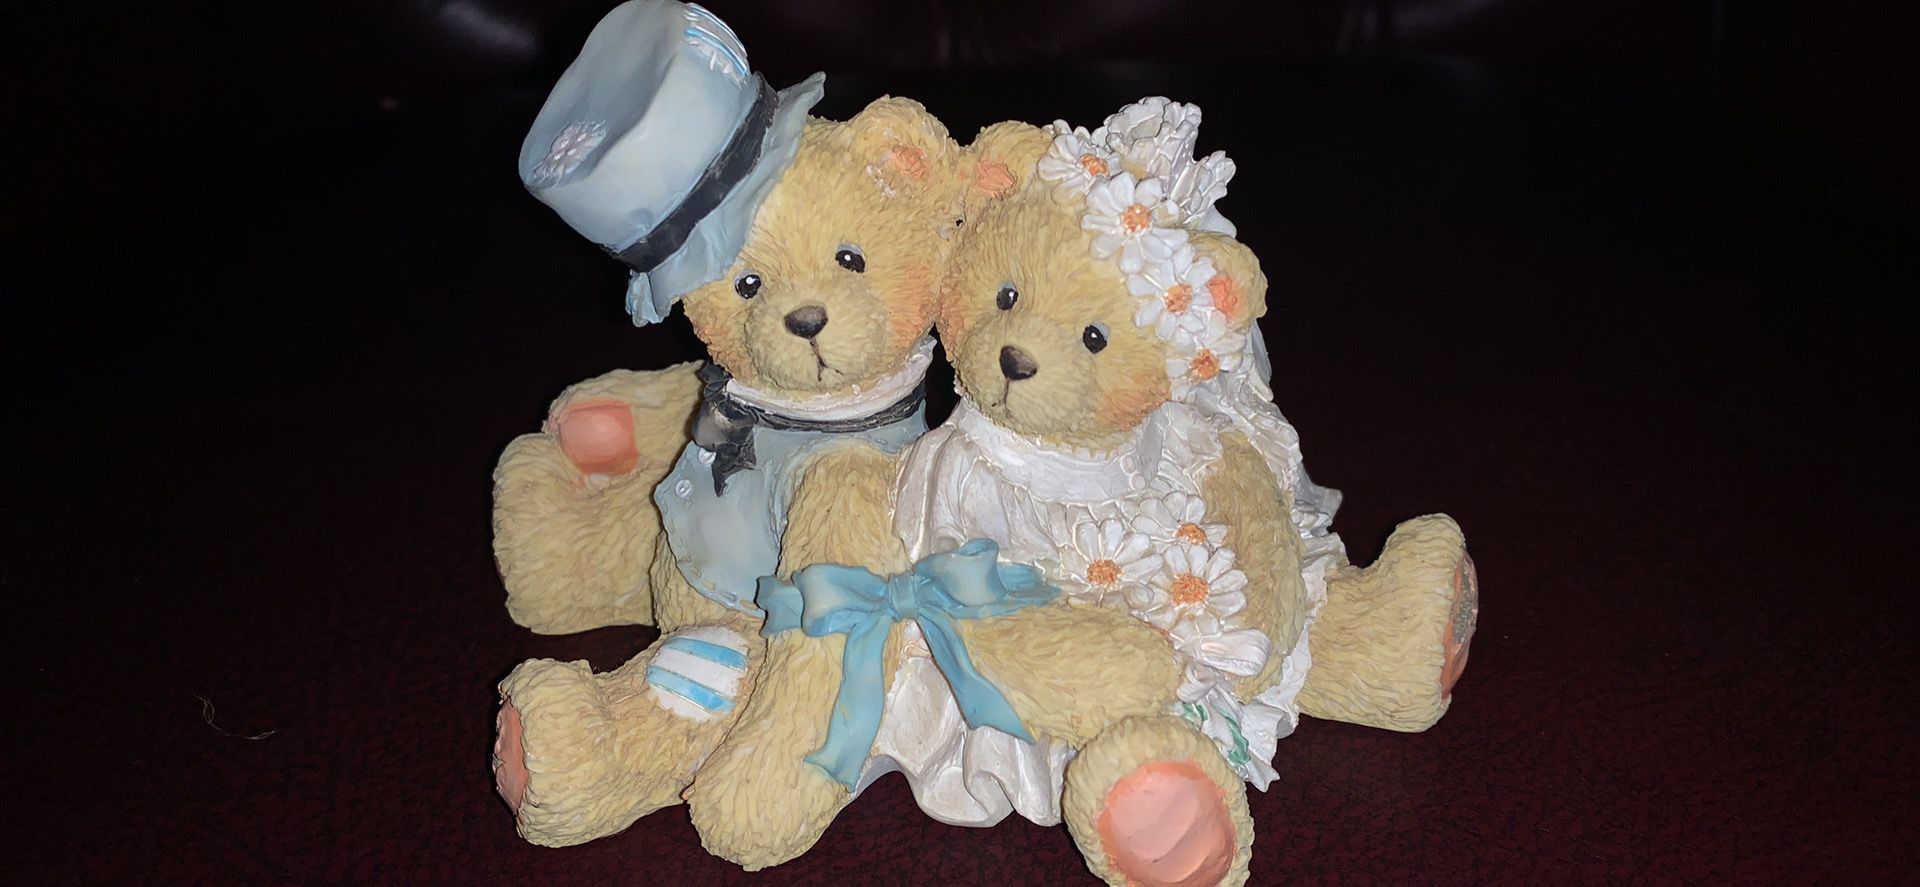 Cherished Teddies “Robbie & Rachael” “Love Bears All Things” Collectible Figurine